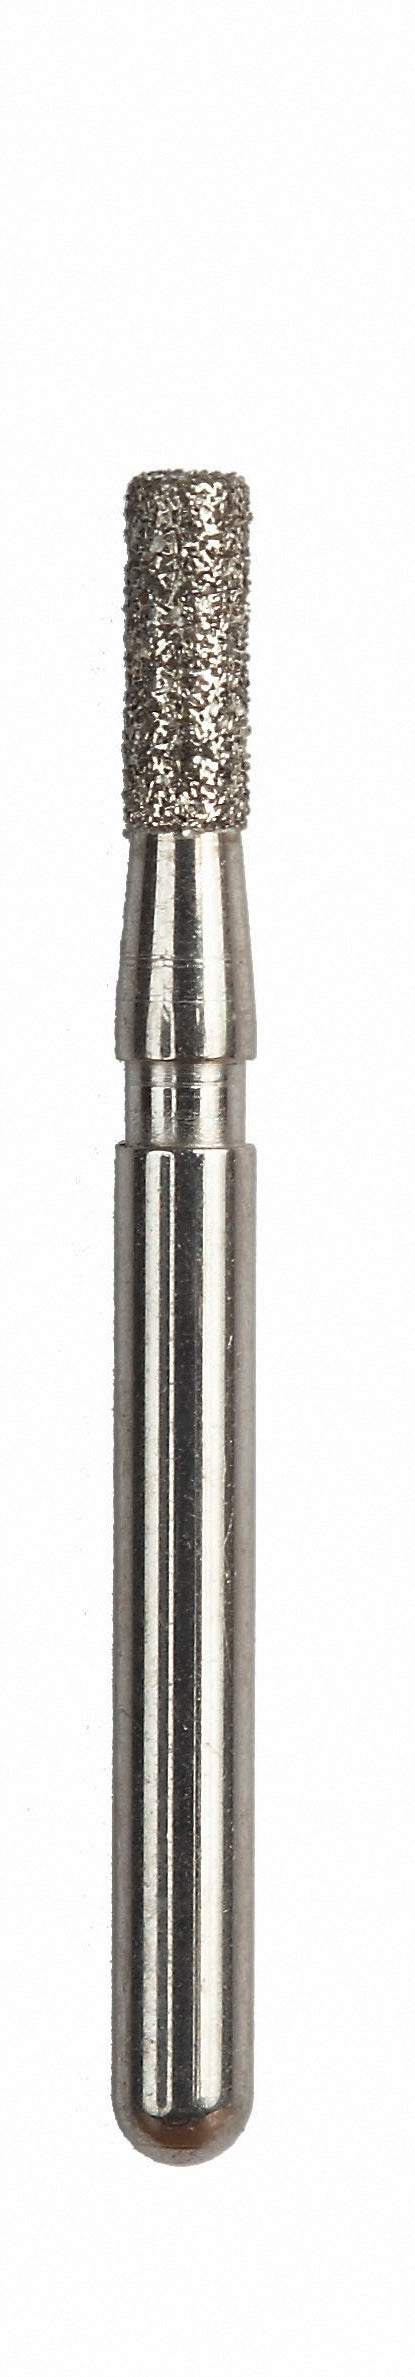 835014 Medium - Flat End Cylinder - Cavity Prep Bur - Diamond Coated (Pack of 6)